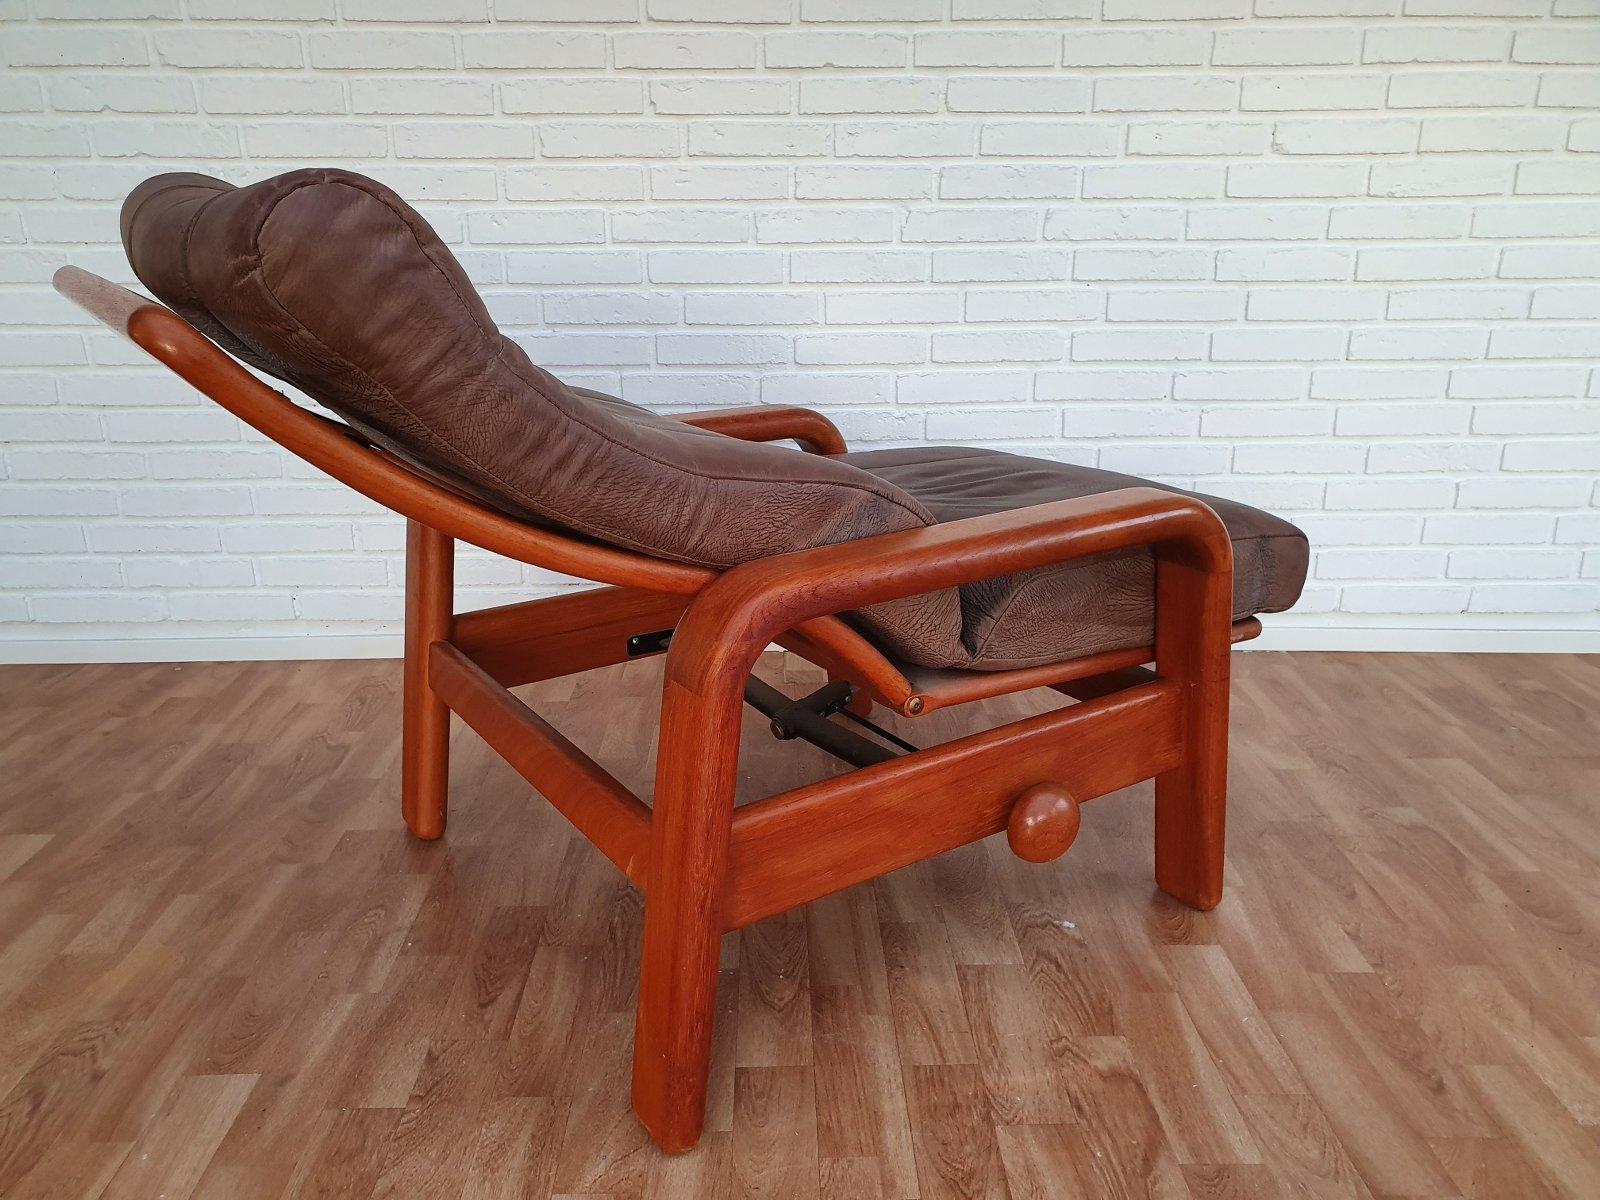 80s, Danish Adjustable Lounge Chair, Hs Design, Nubuck Leather, Solid Teak Wood For Sale 3